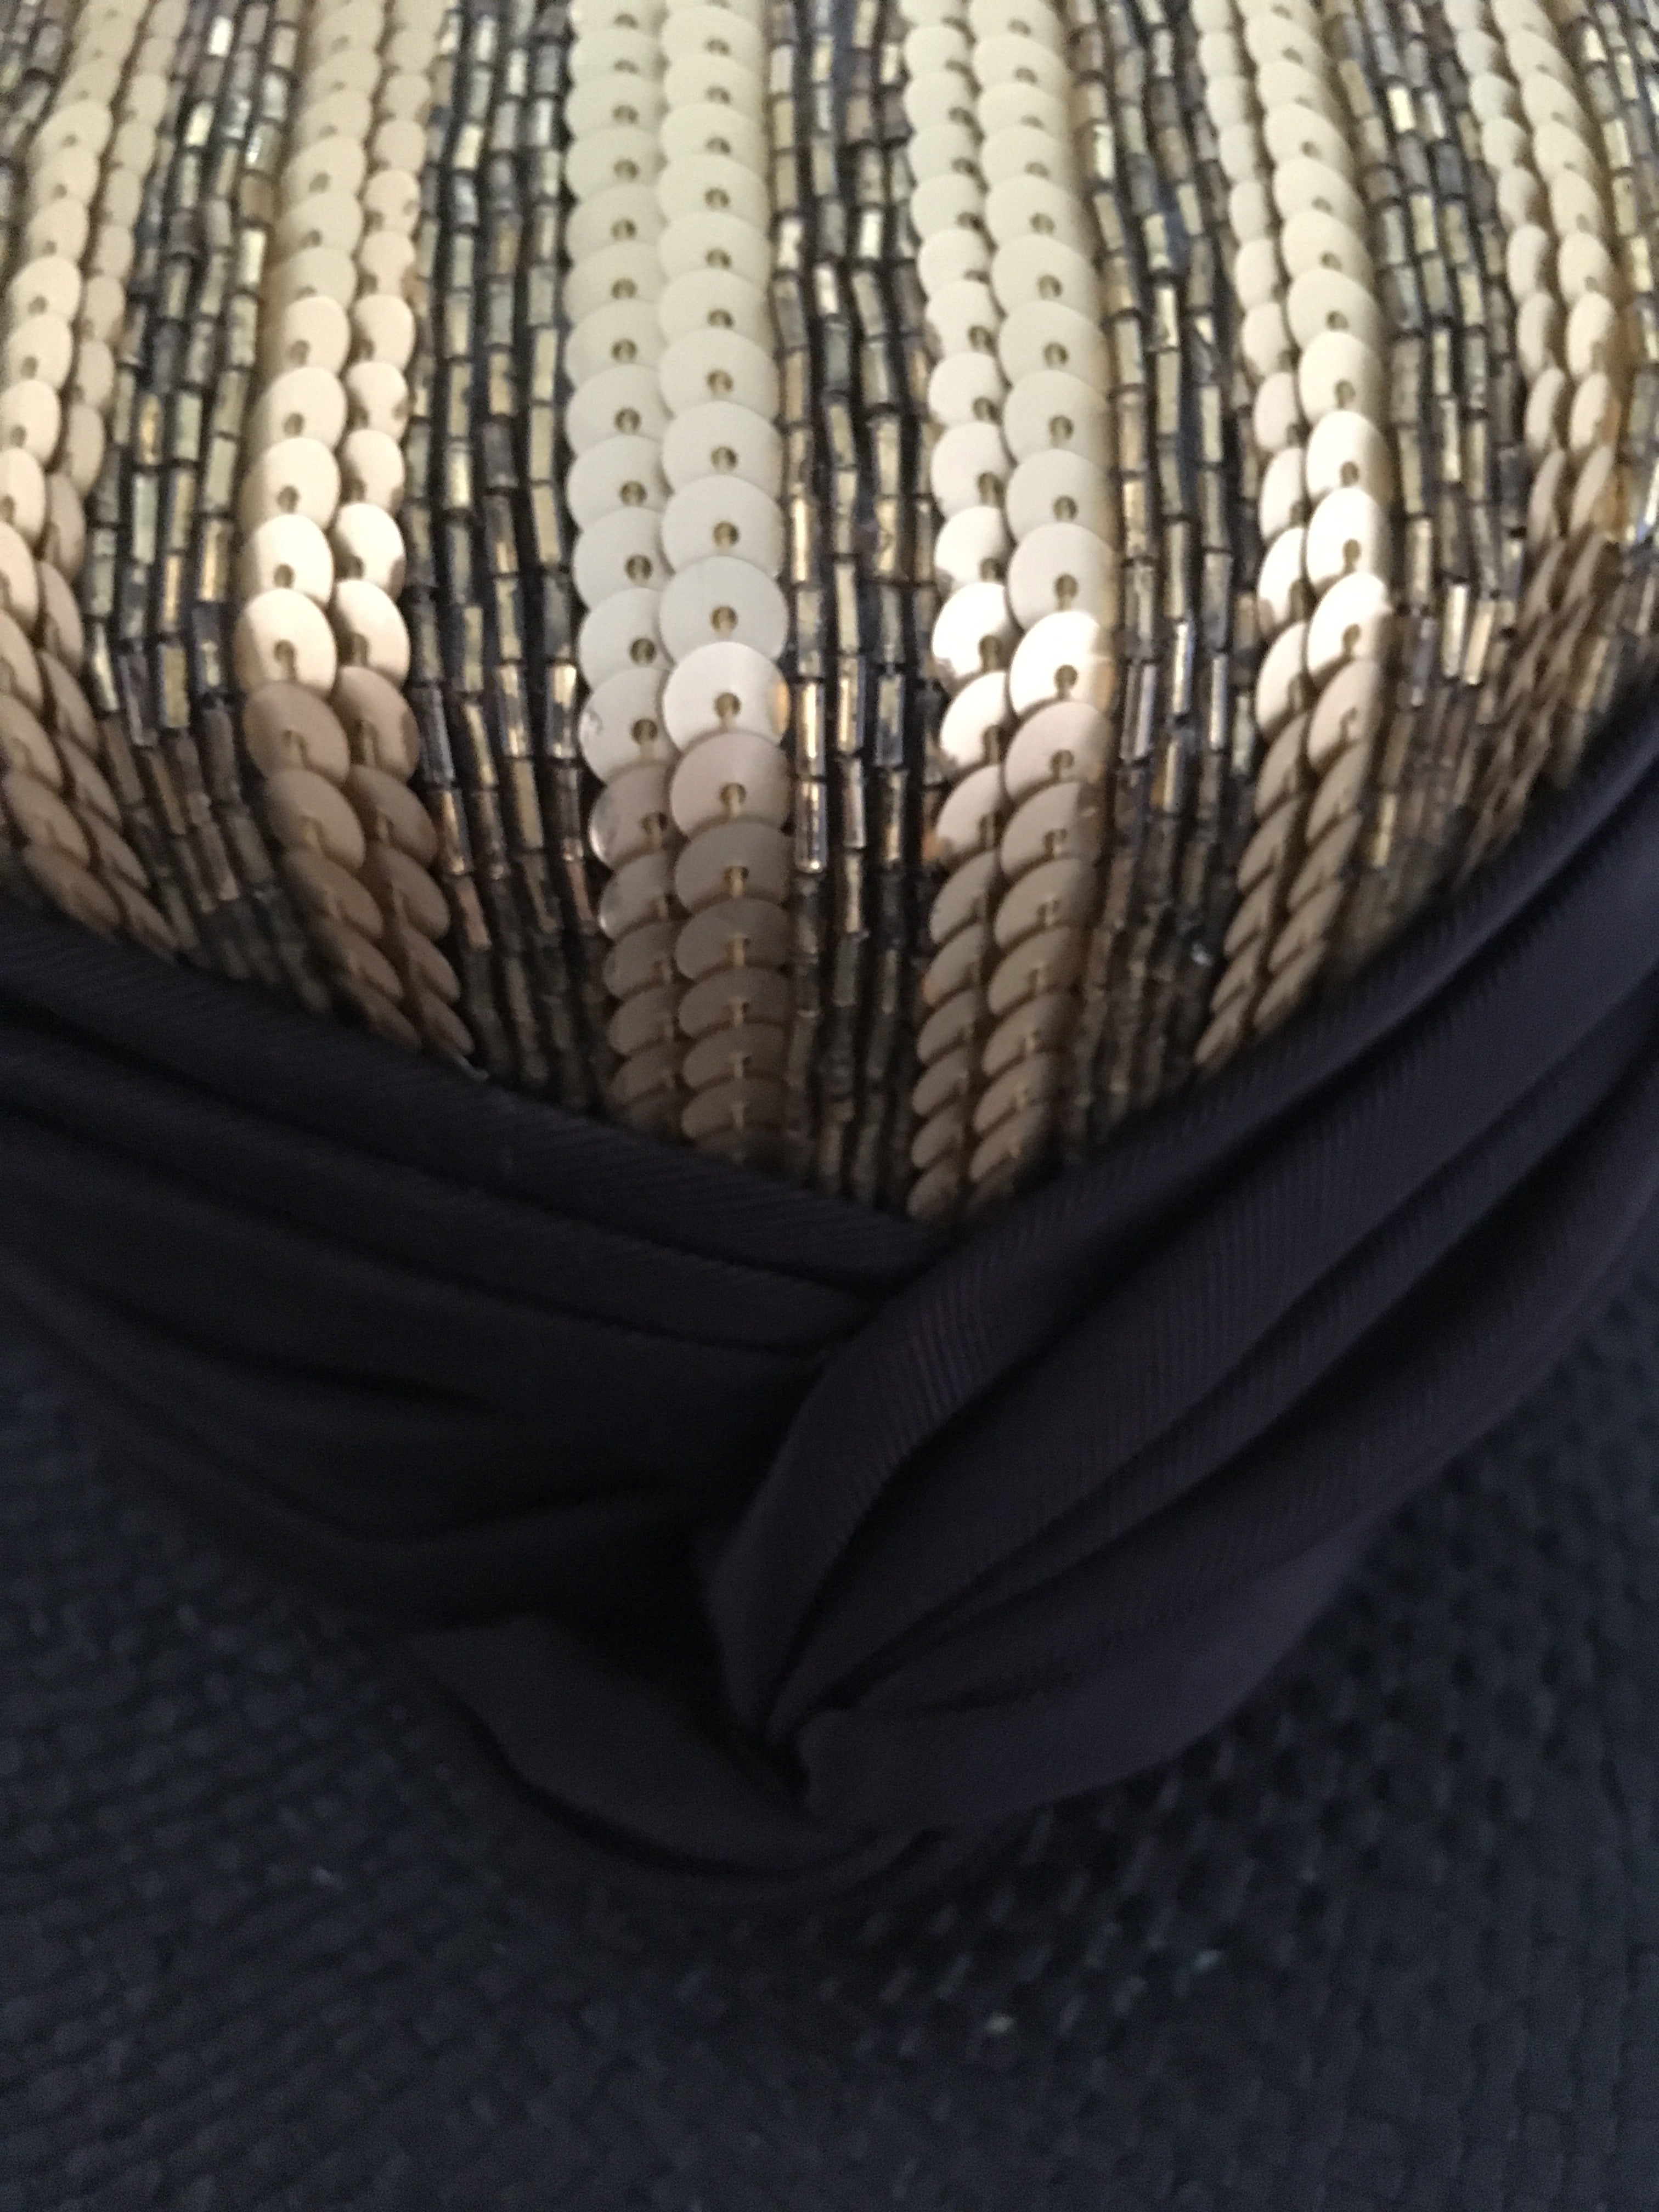 Glam Sequined Summer Fun Black Straw Hat